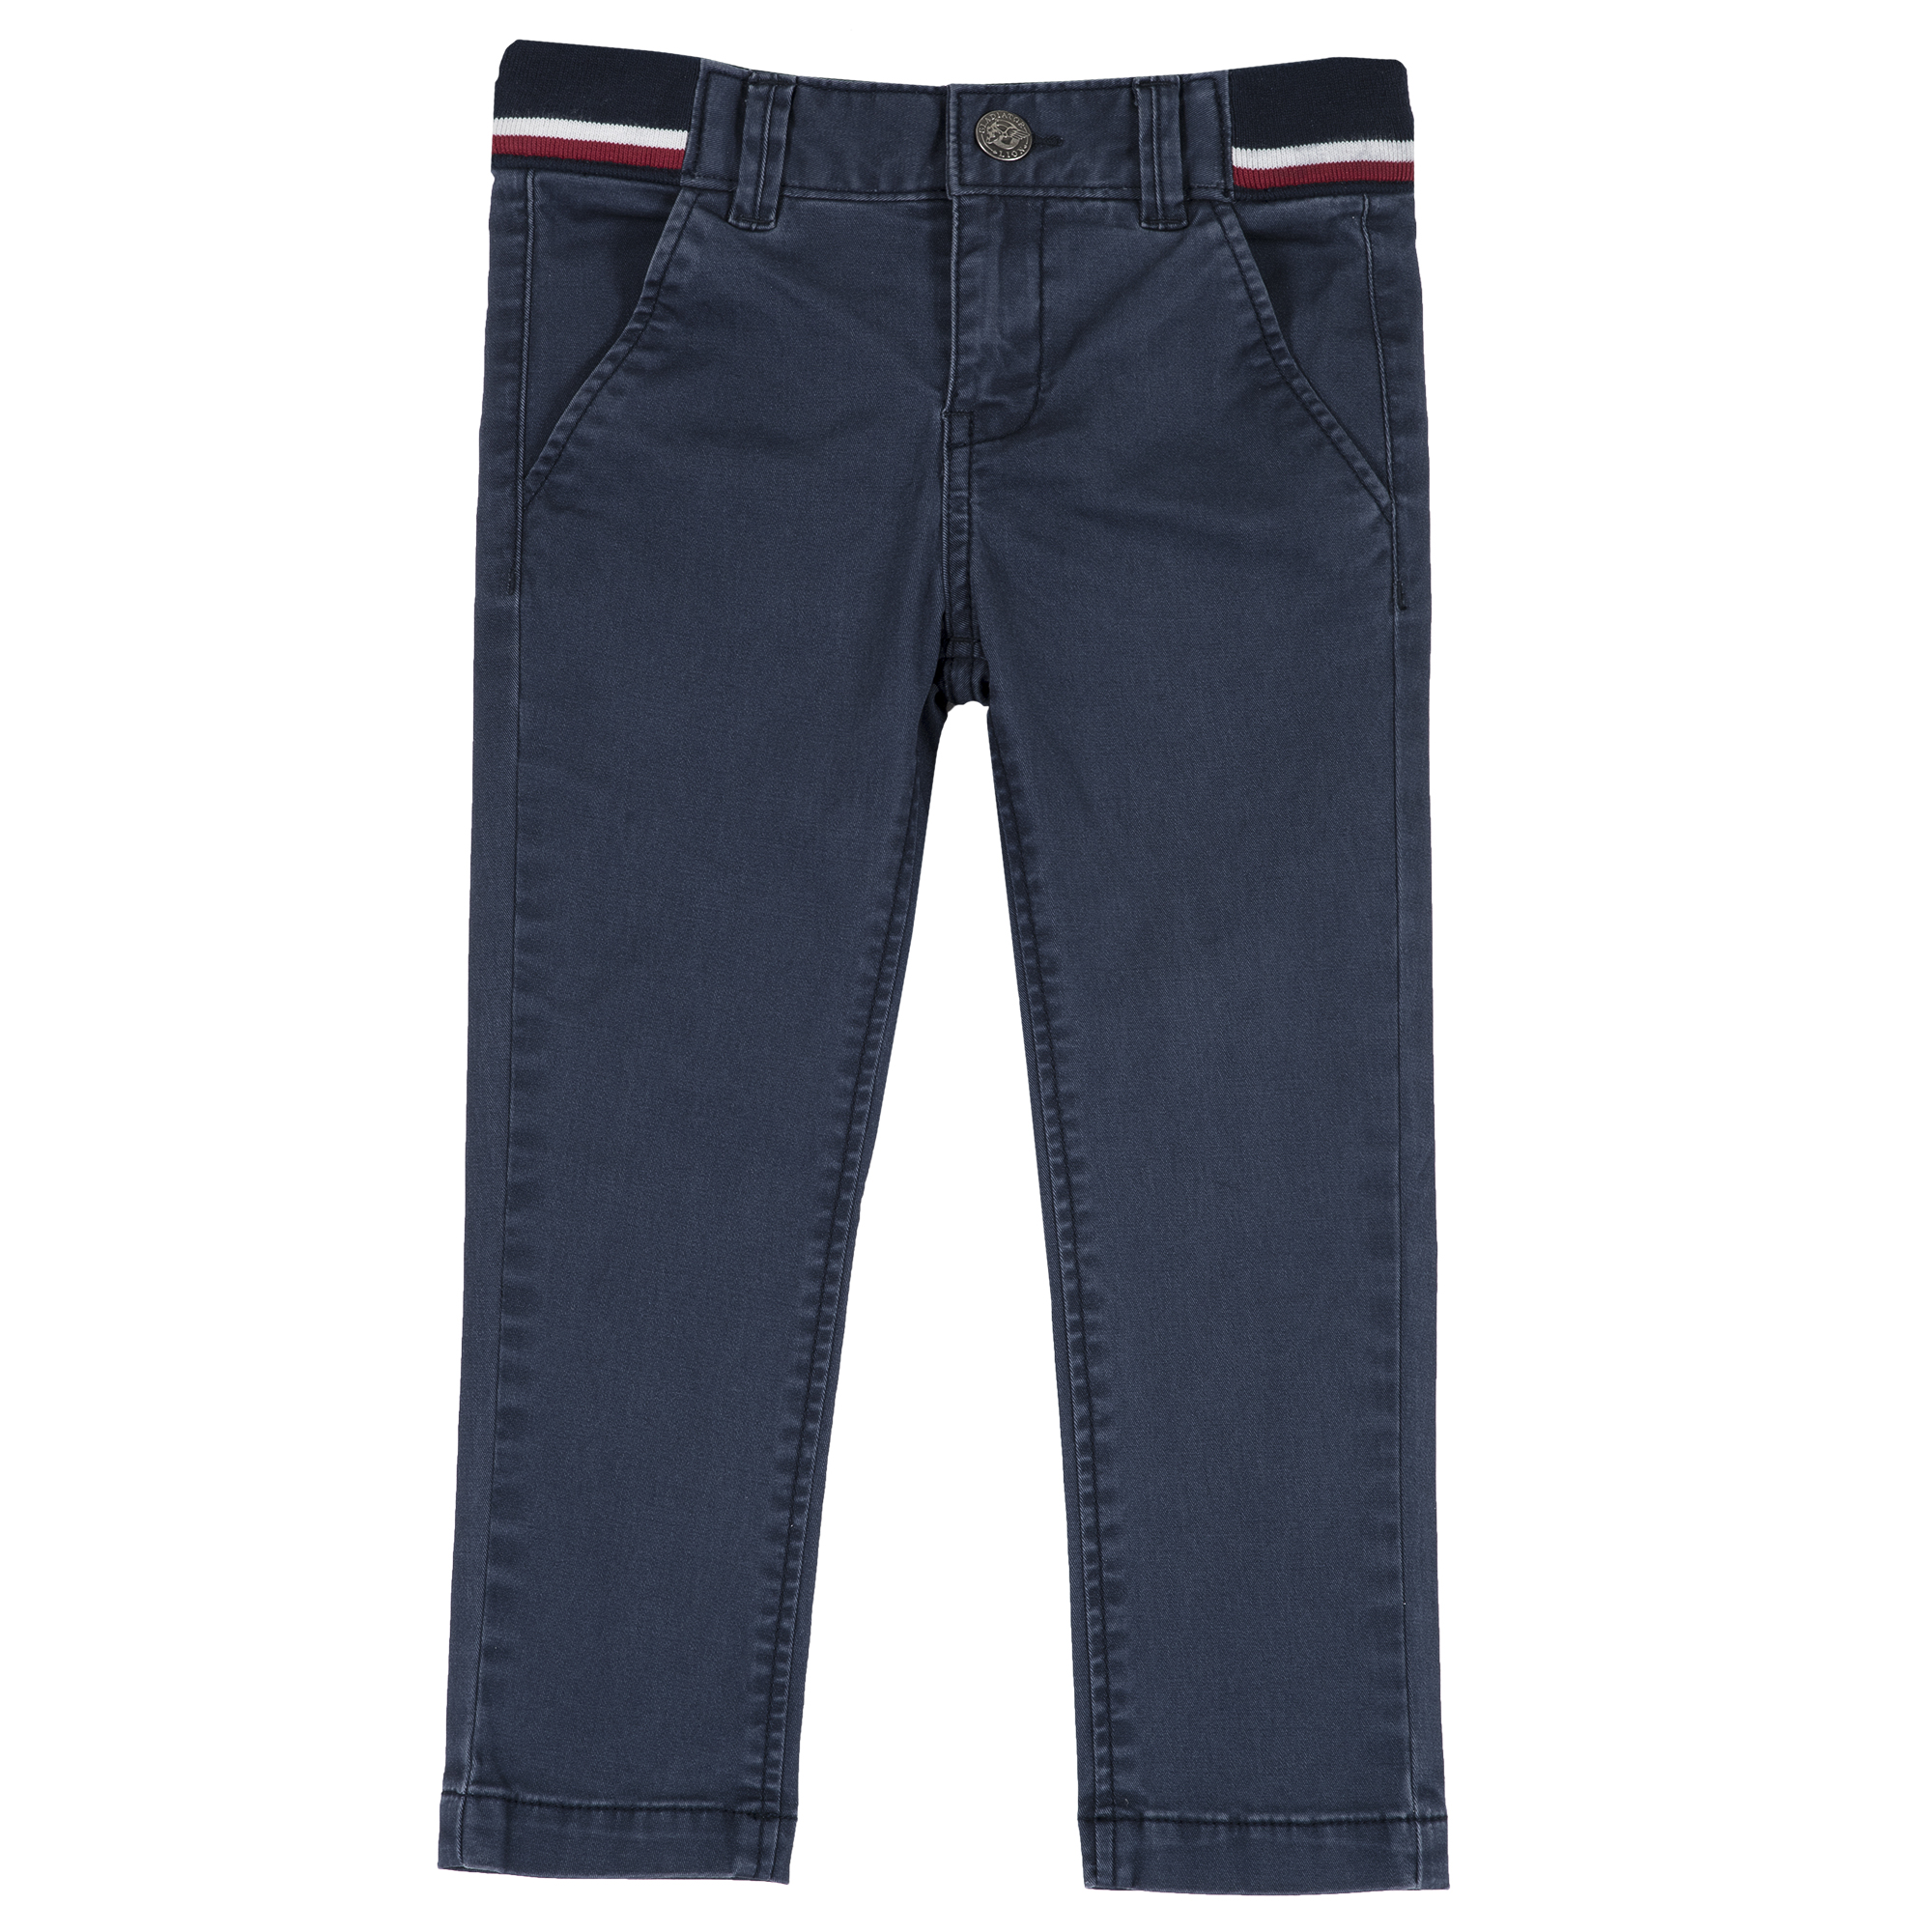 Pantaloni copii Chicco, bleumarin, banda elastica multicolor, 08066